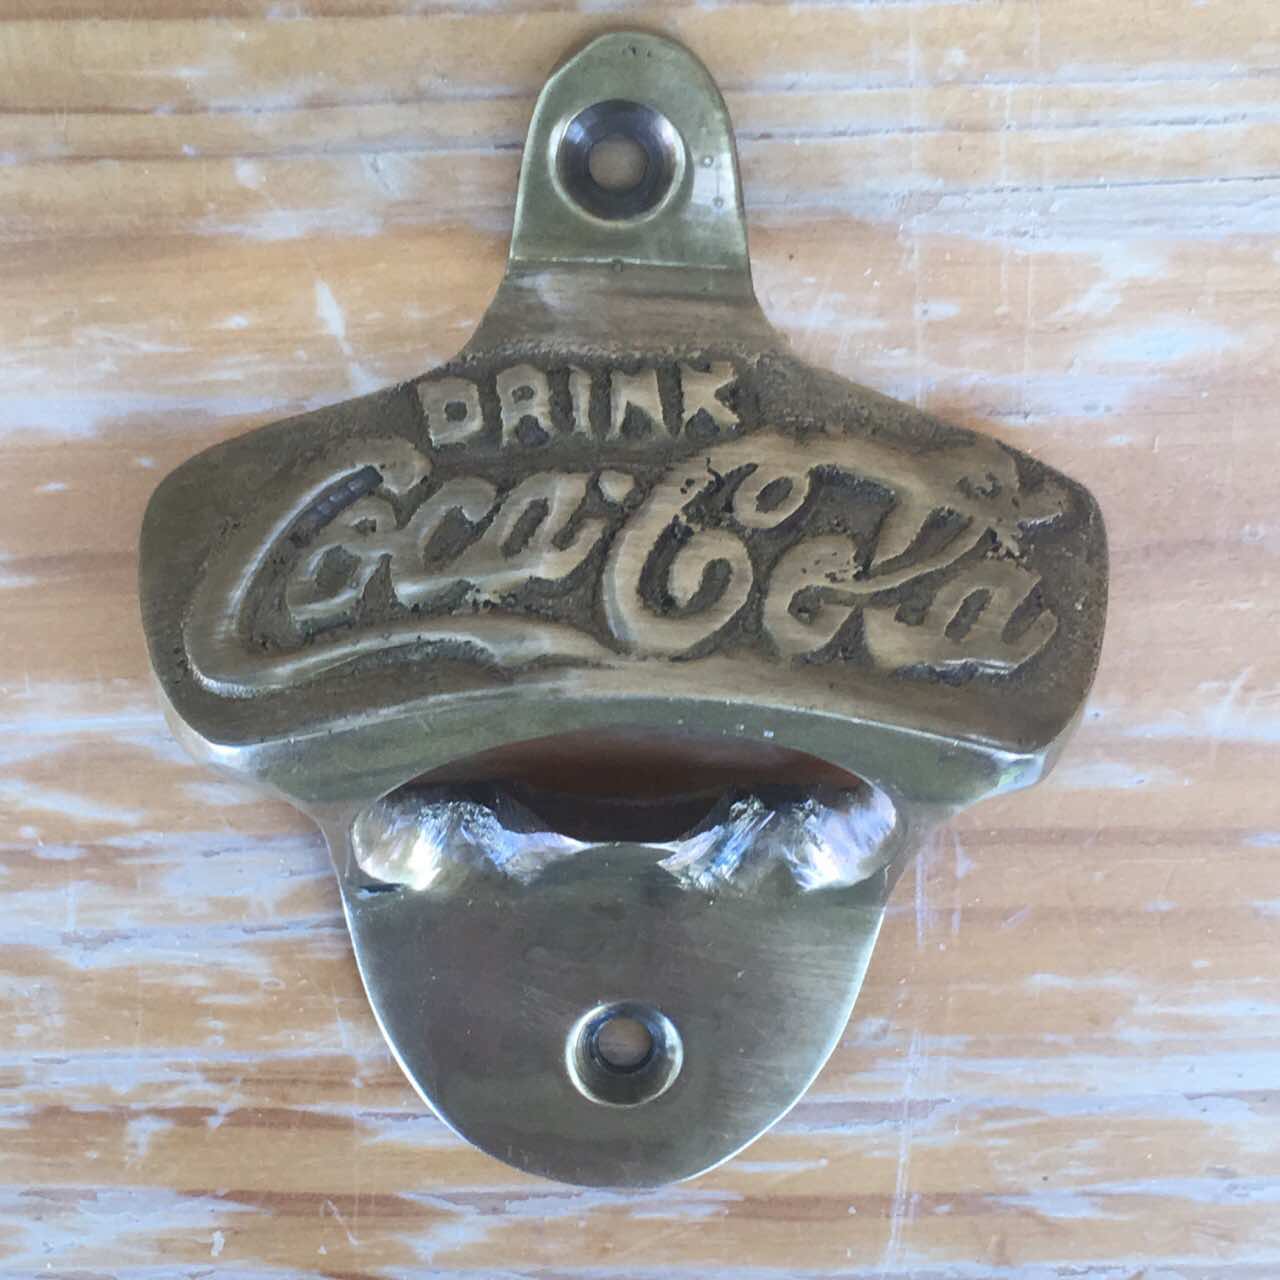 Antique coke bottle opener